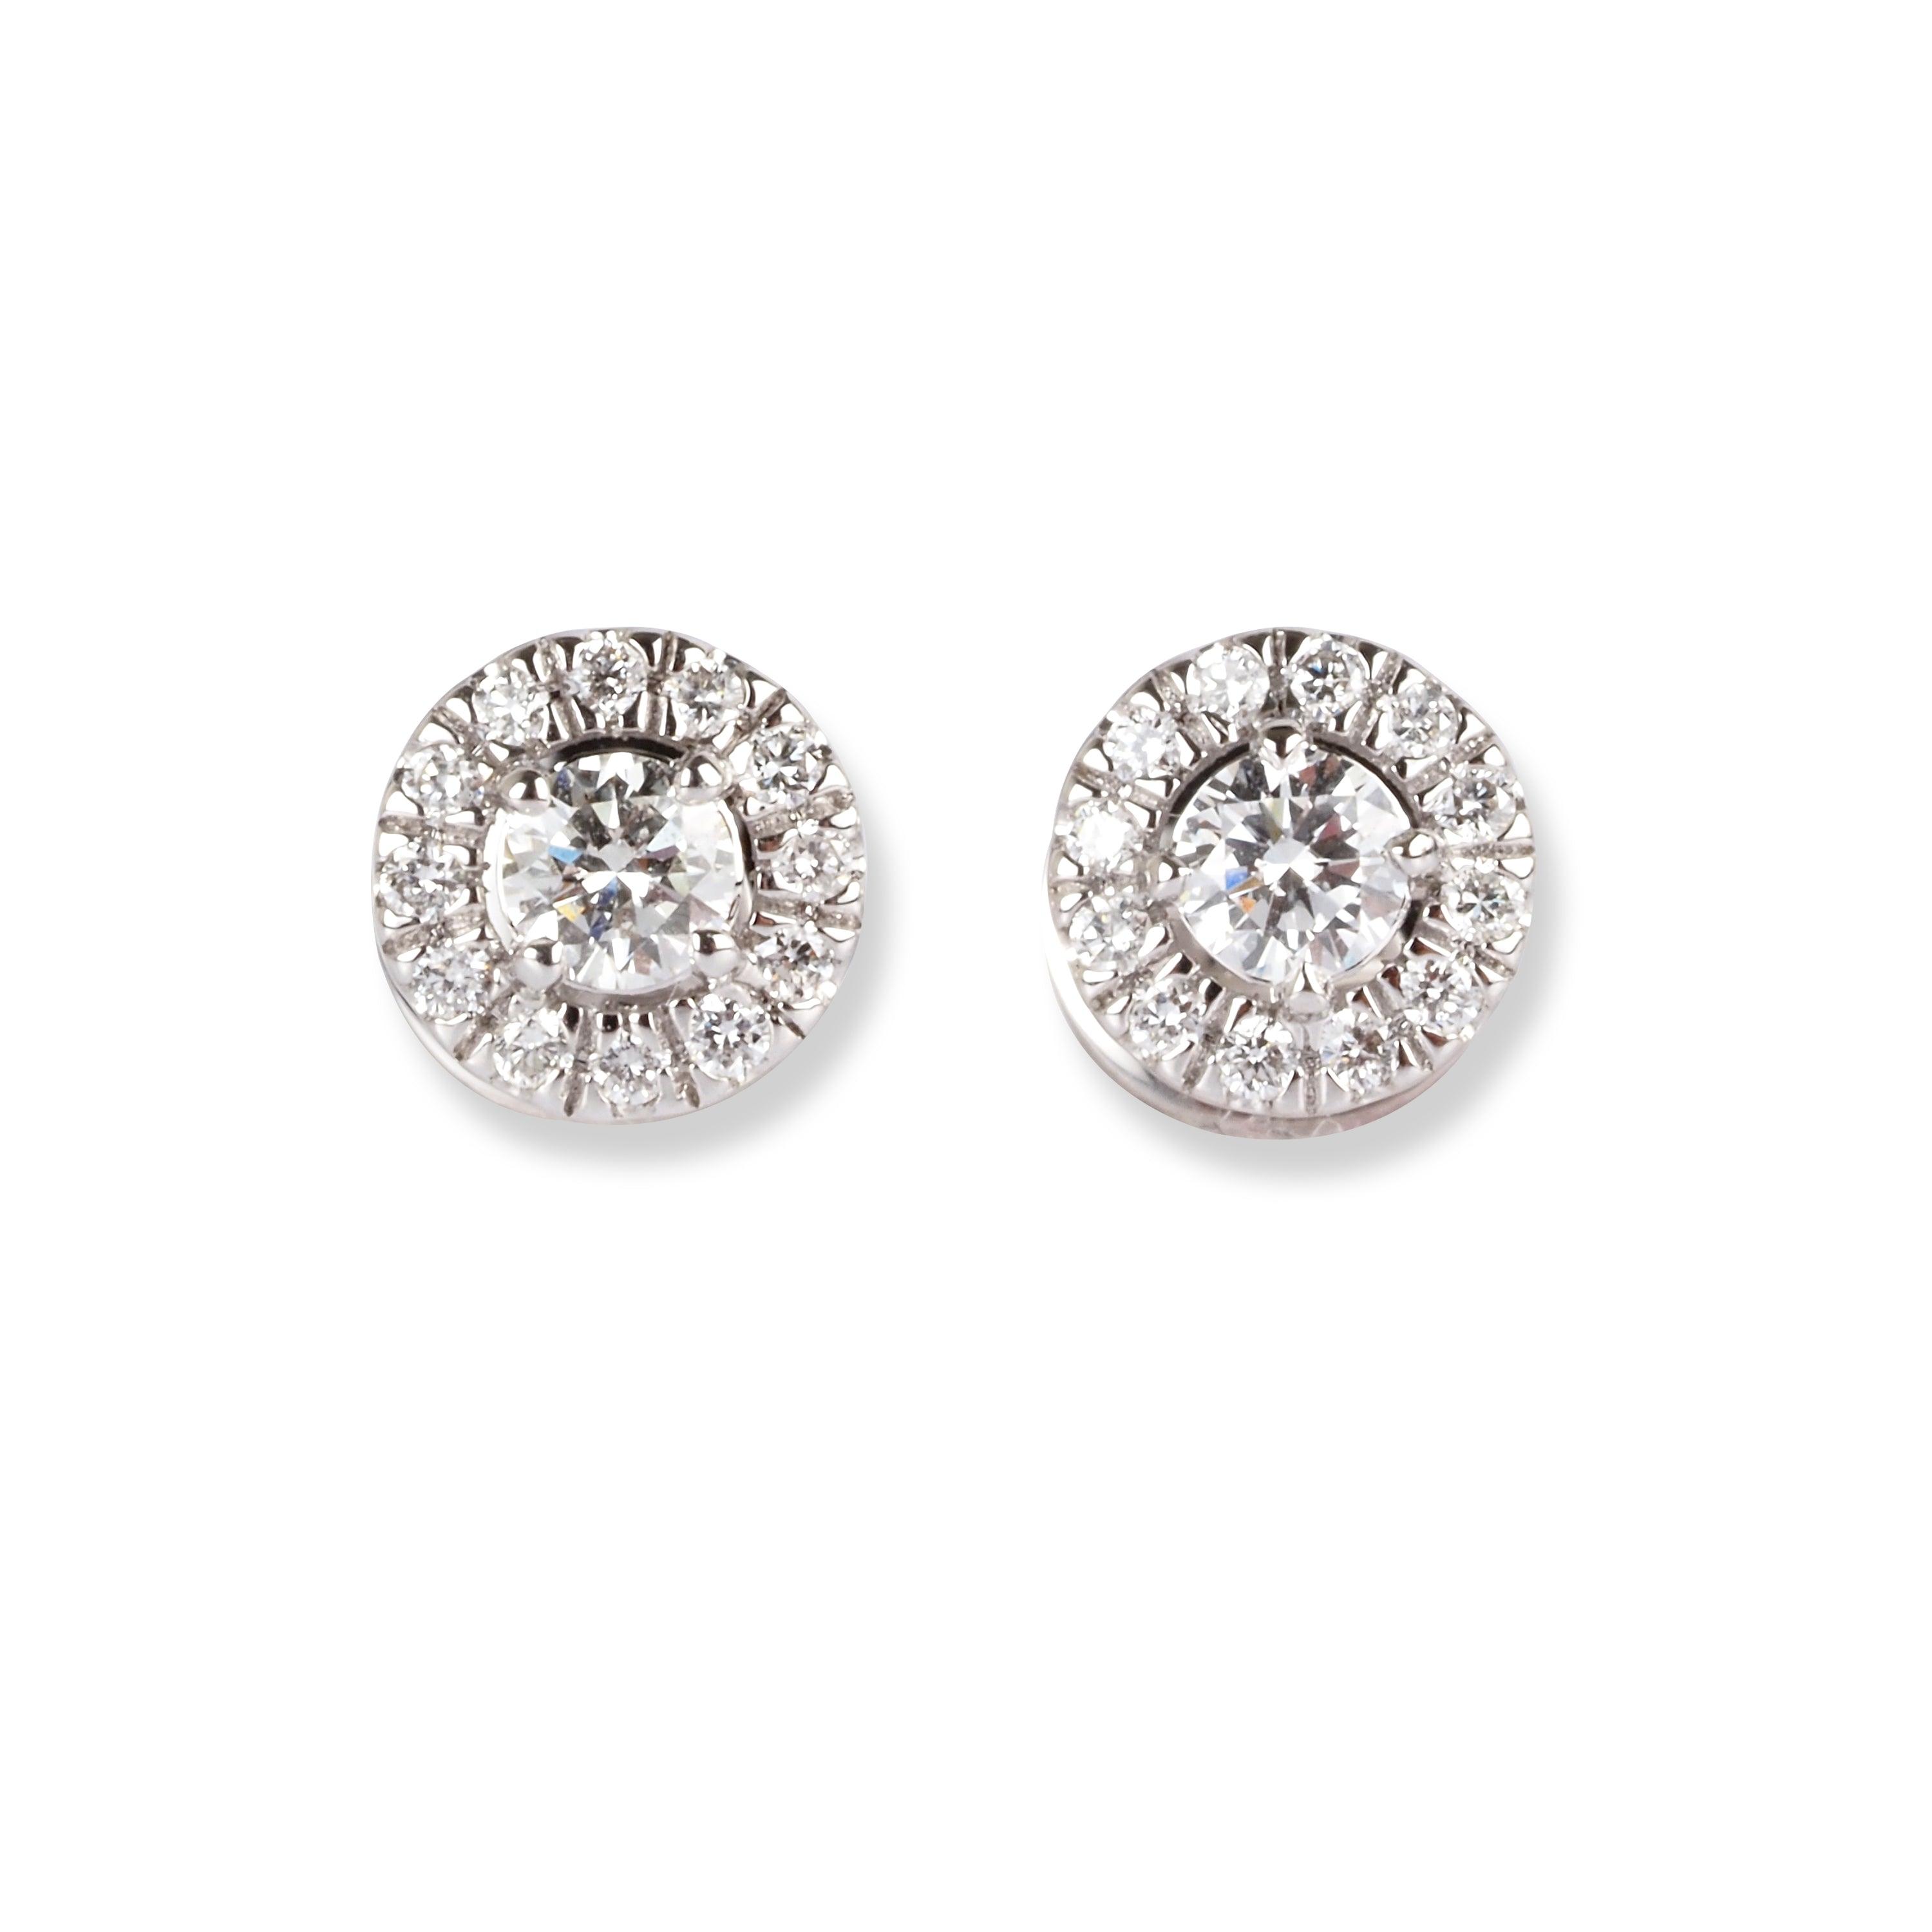 18ct White Gold Diamond Earrings E-7944 - Minar Jewellers